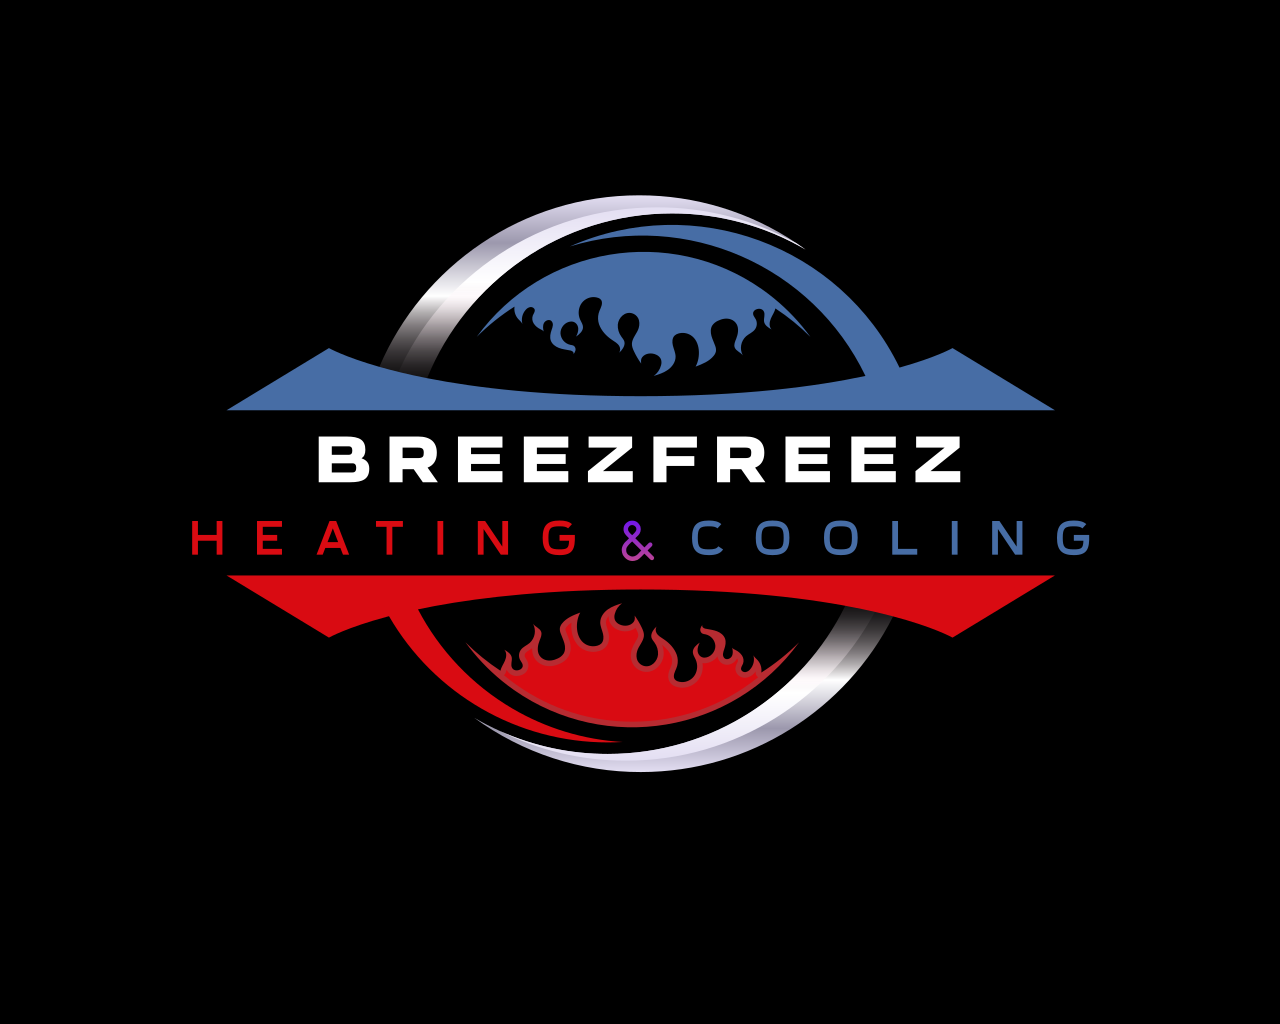 BREEZFREEZ Inc's logo